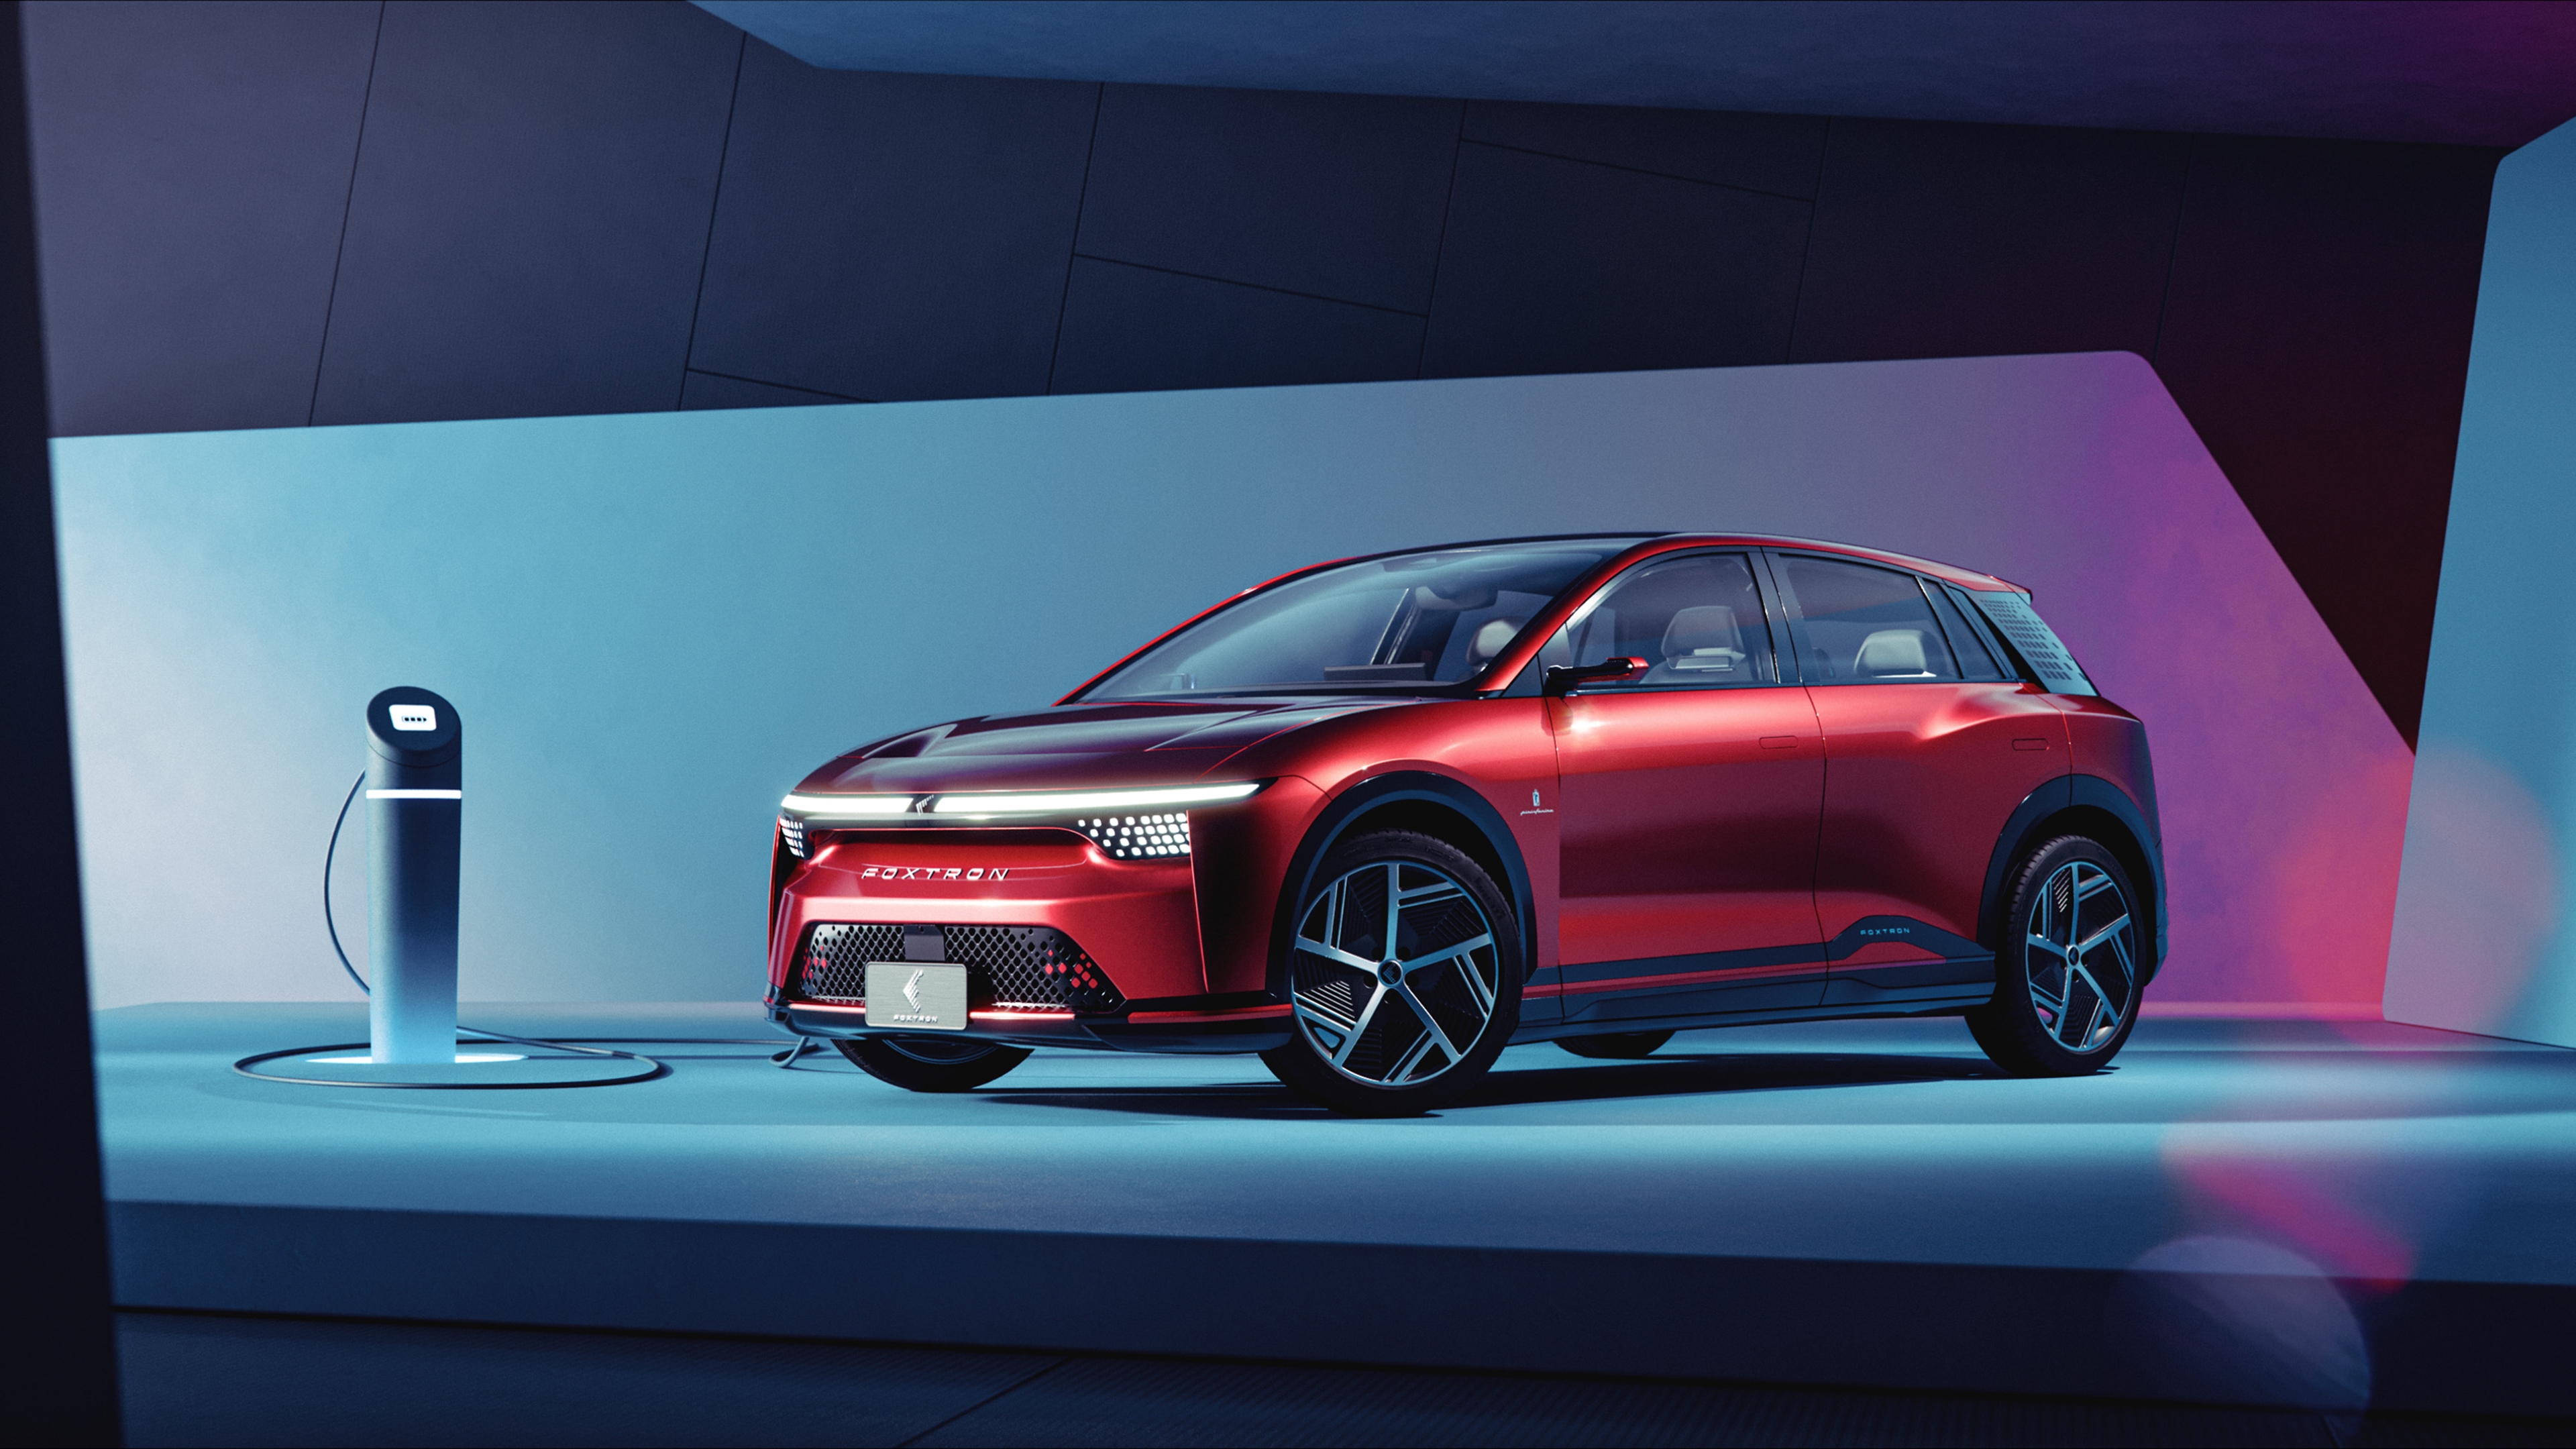 HD wallpaper, Electric Crossover, Concept Cars, 2022, Foxtron Model B